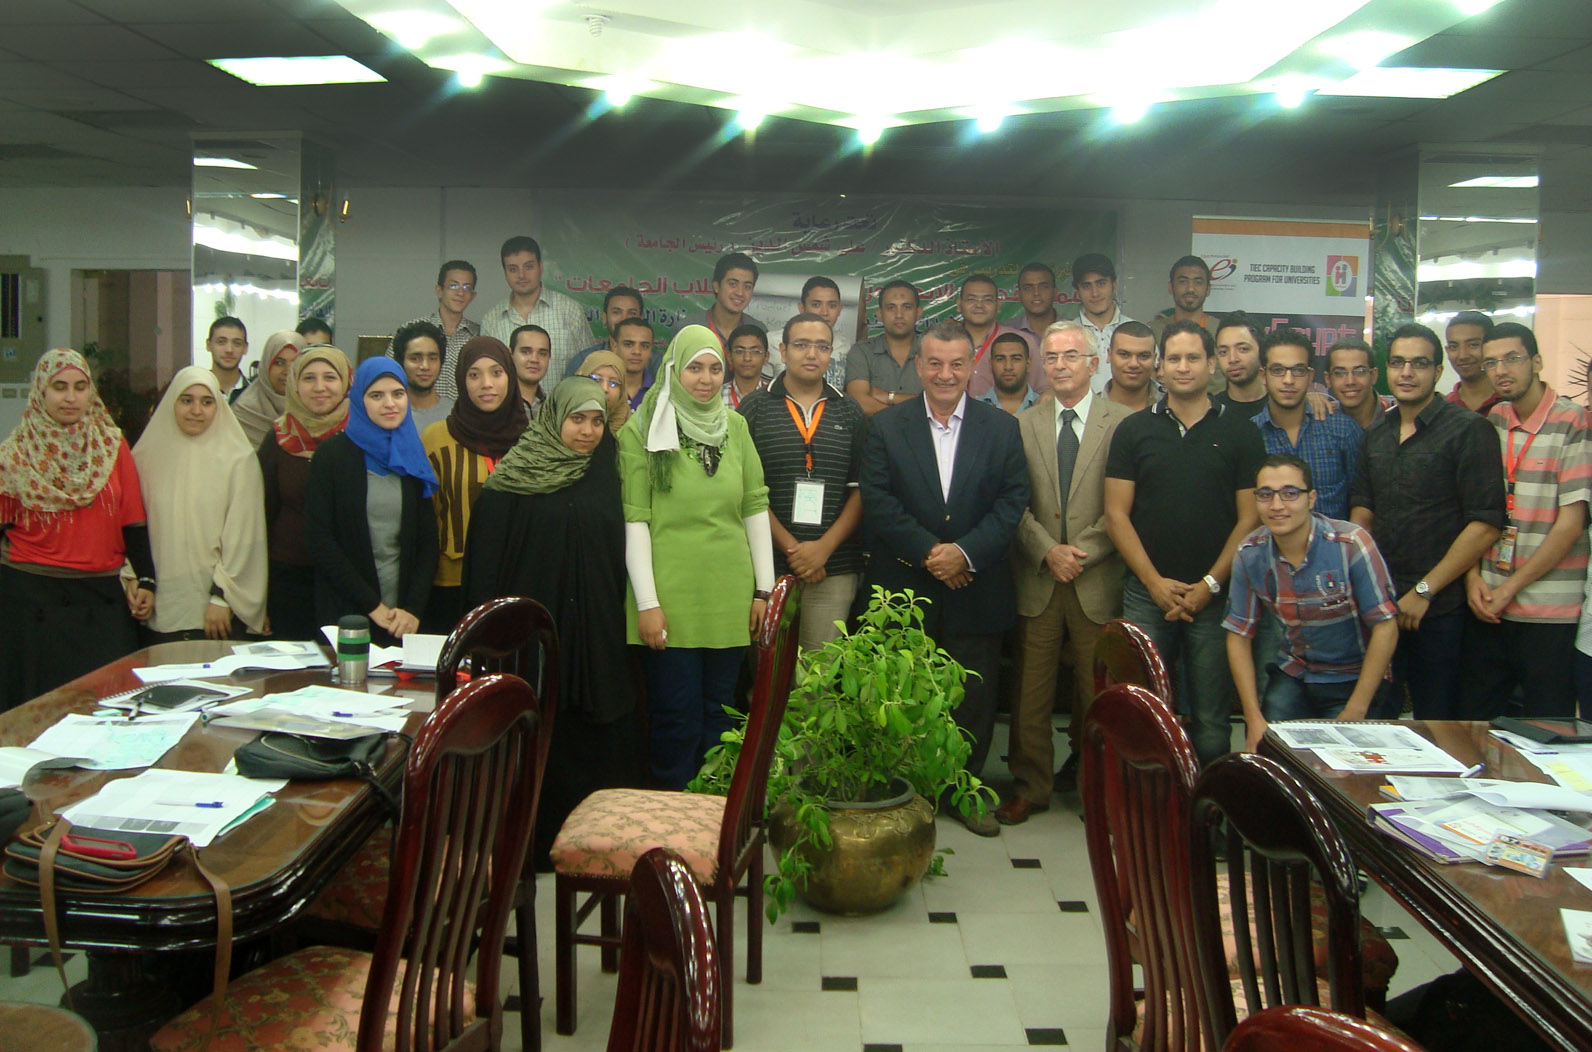 Benha University Students start the Innovation and Entrepreneurship Training